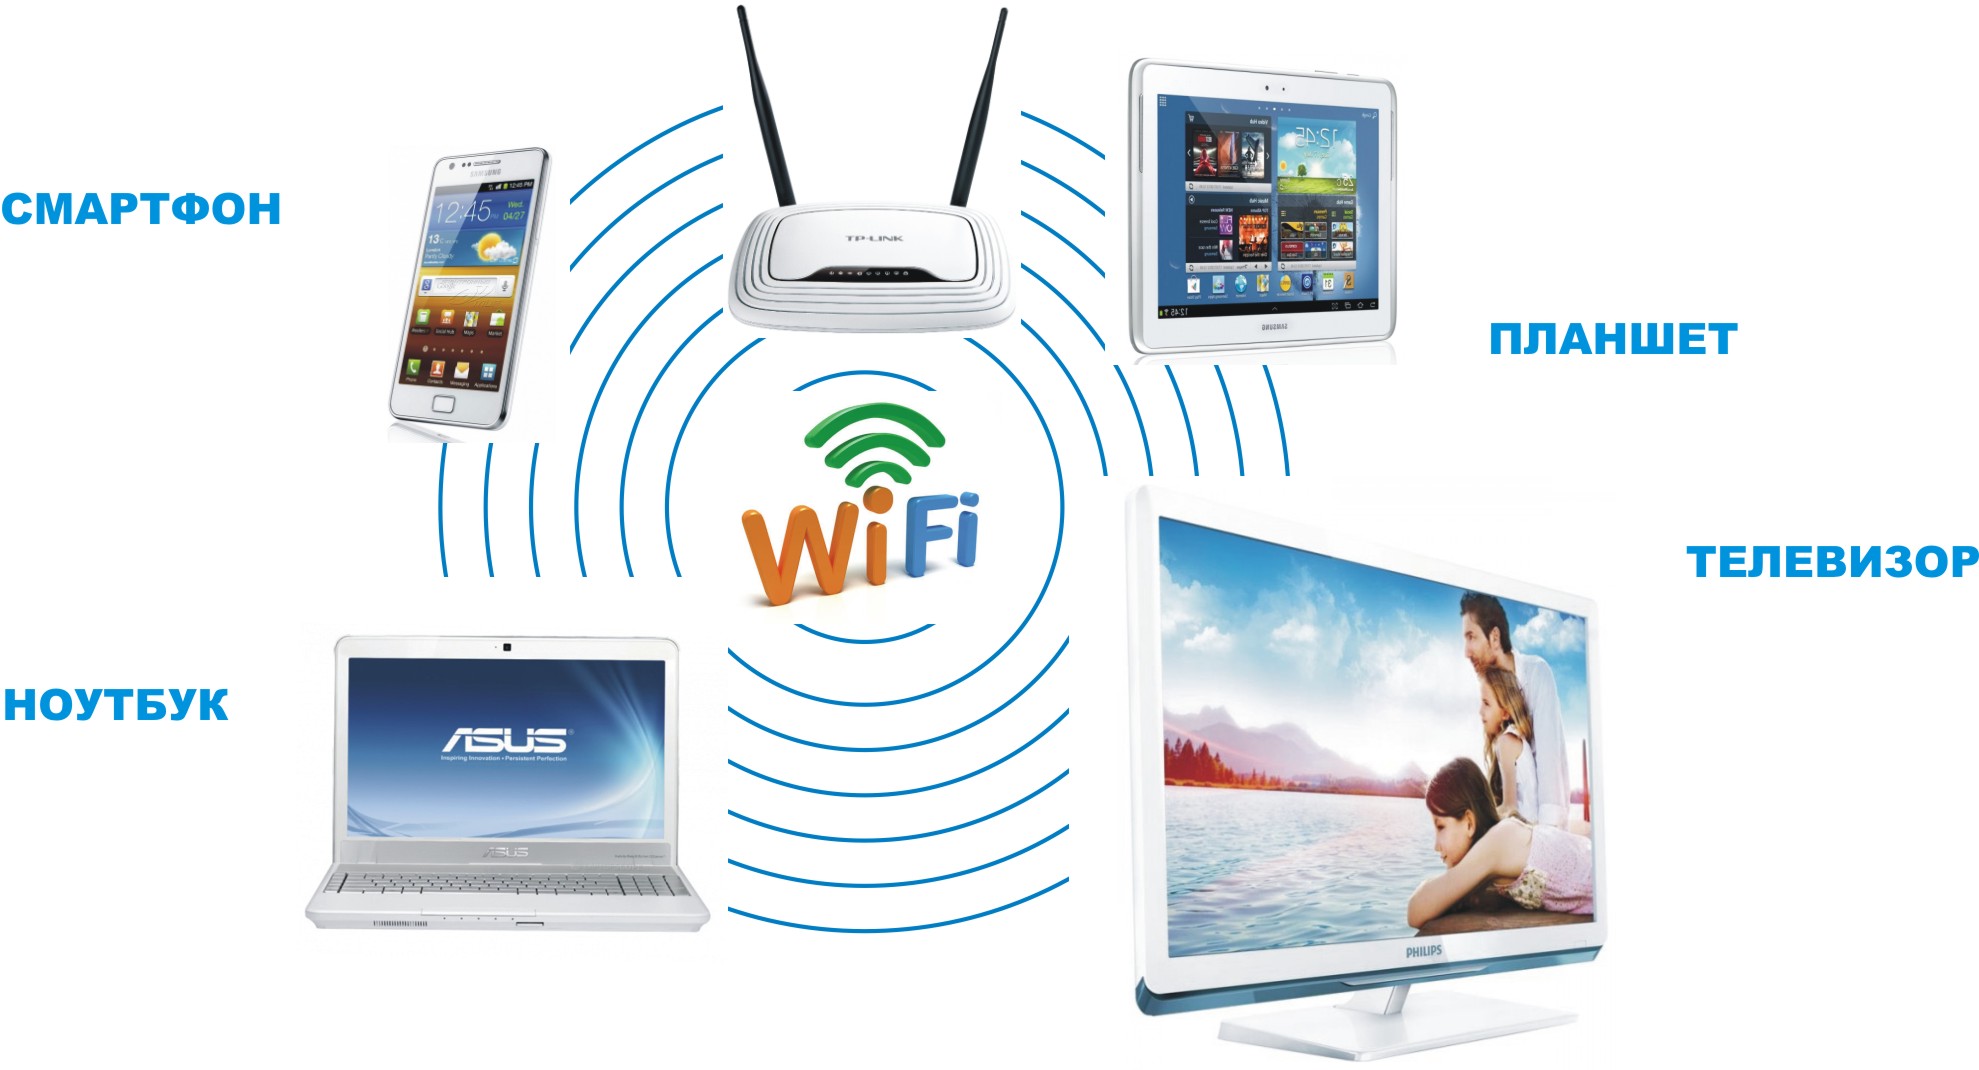 Wi products. WIFI роутер UZTELECOM. Беспроводной интернет. Беспроводное соединение Wi-Fi. Телевизор беспроводная интернет.